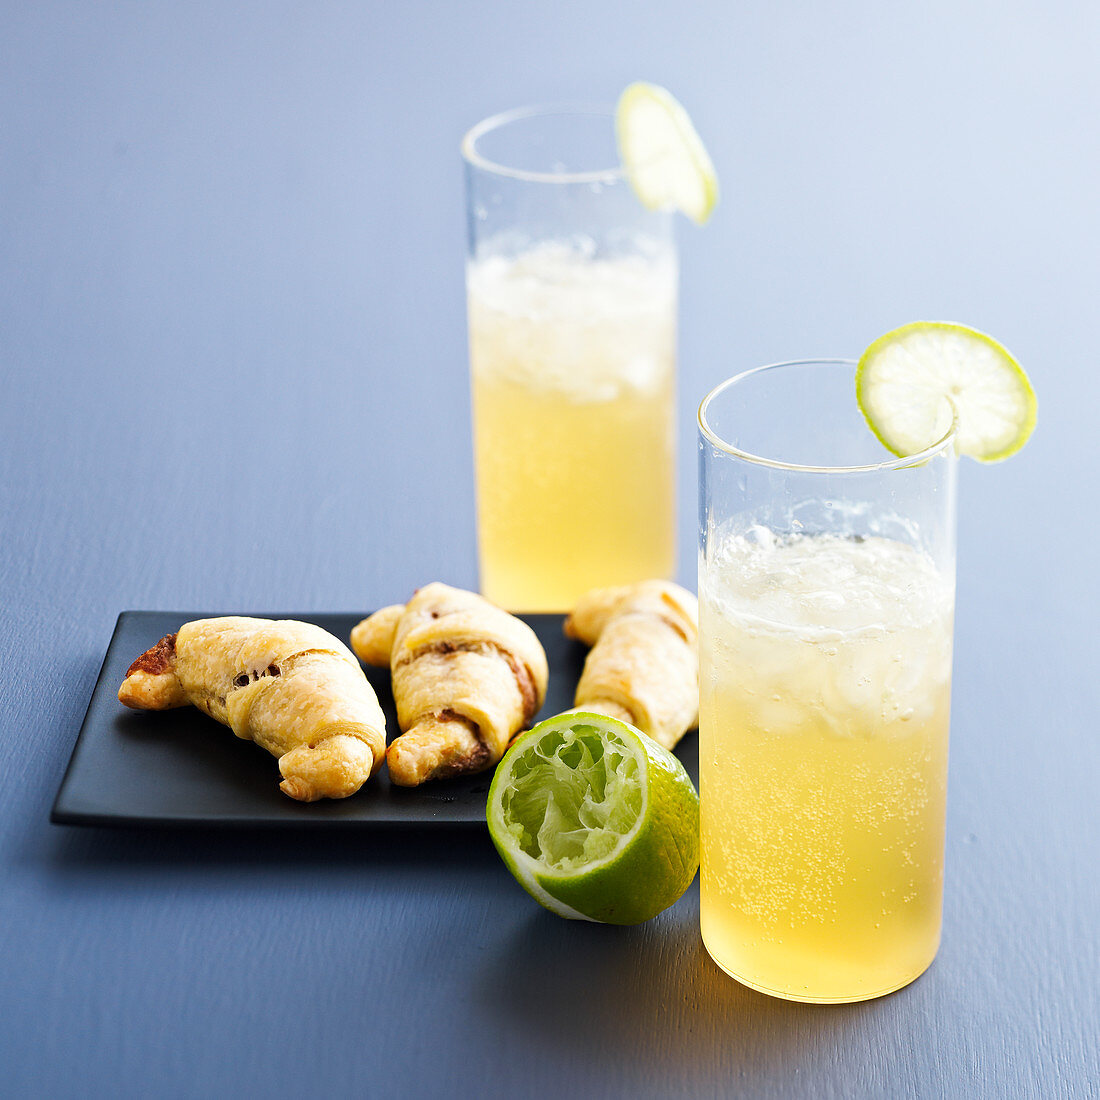 Cocktail 'Iceberg' mit Cidre, Limette und Mini-Croissants als Aperitif